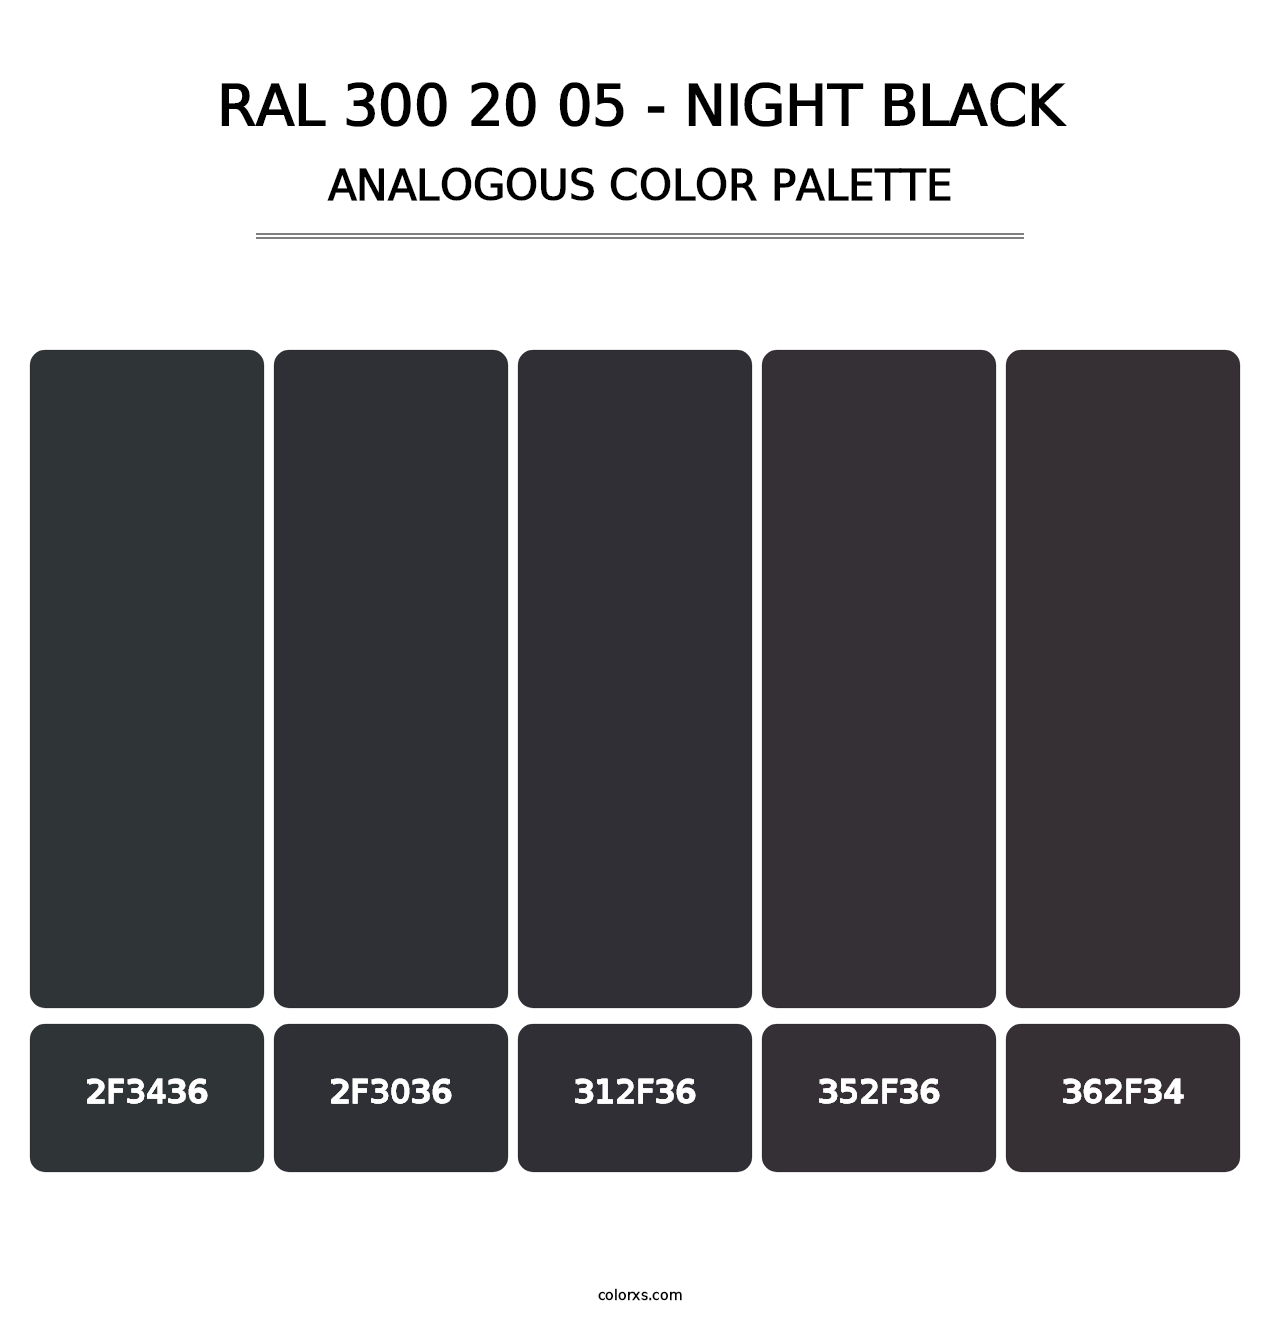 RAL 300 20 05 - Night Black - Analogous Color Palette